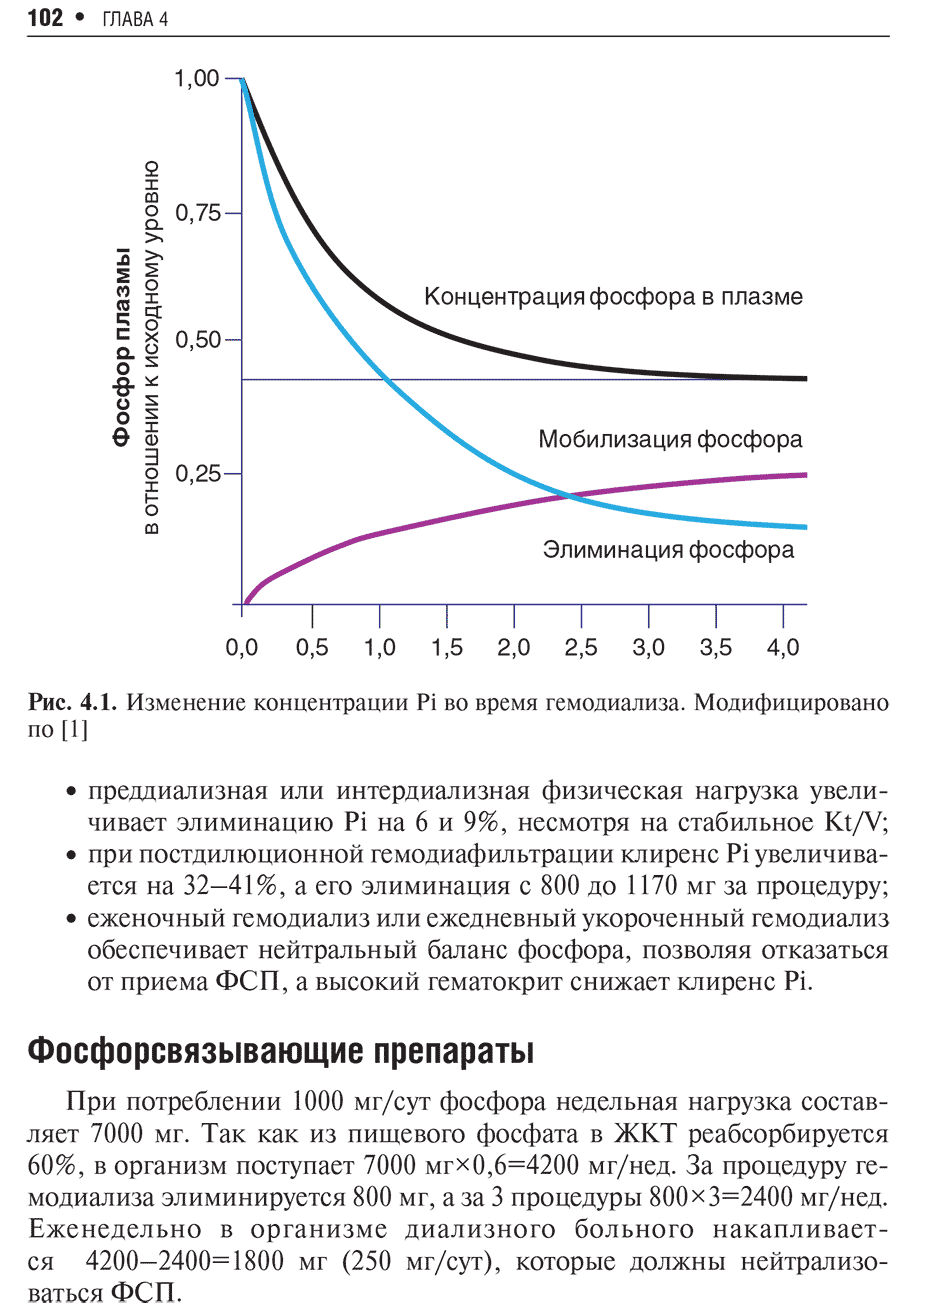 Рис. 4.1. Изменение концентрации Pi во время гемодиализа.